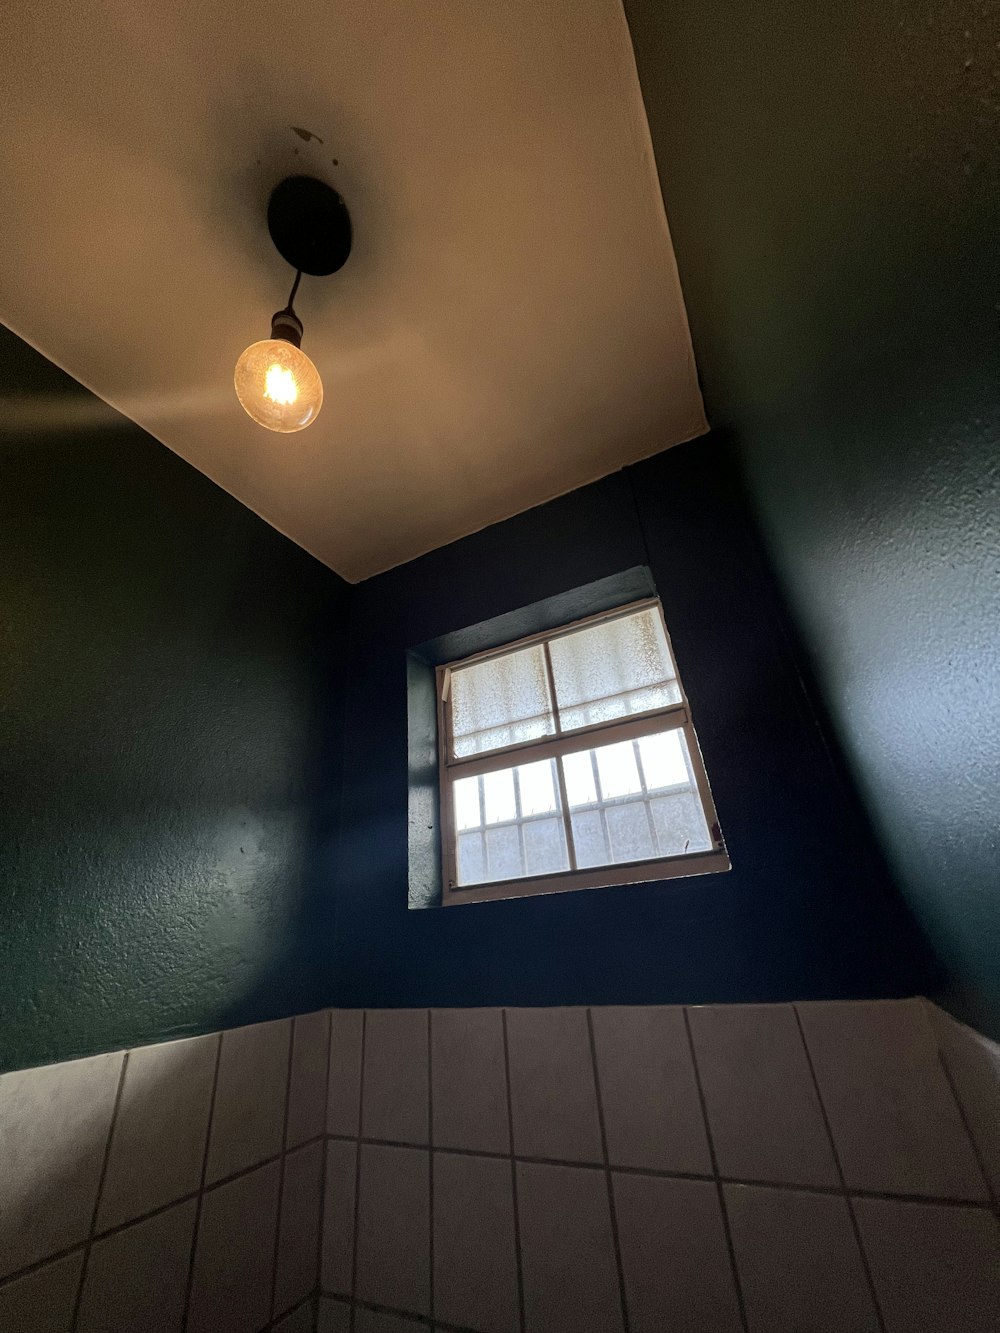 a bathroom with a window and tiled floor